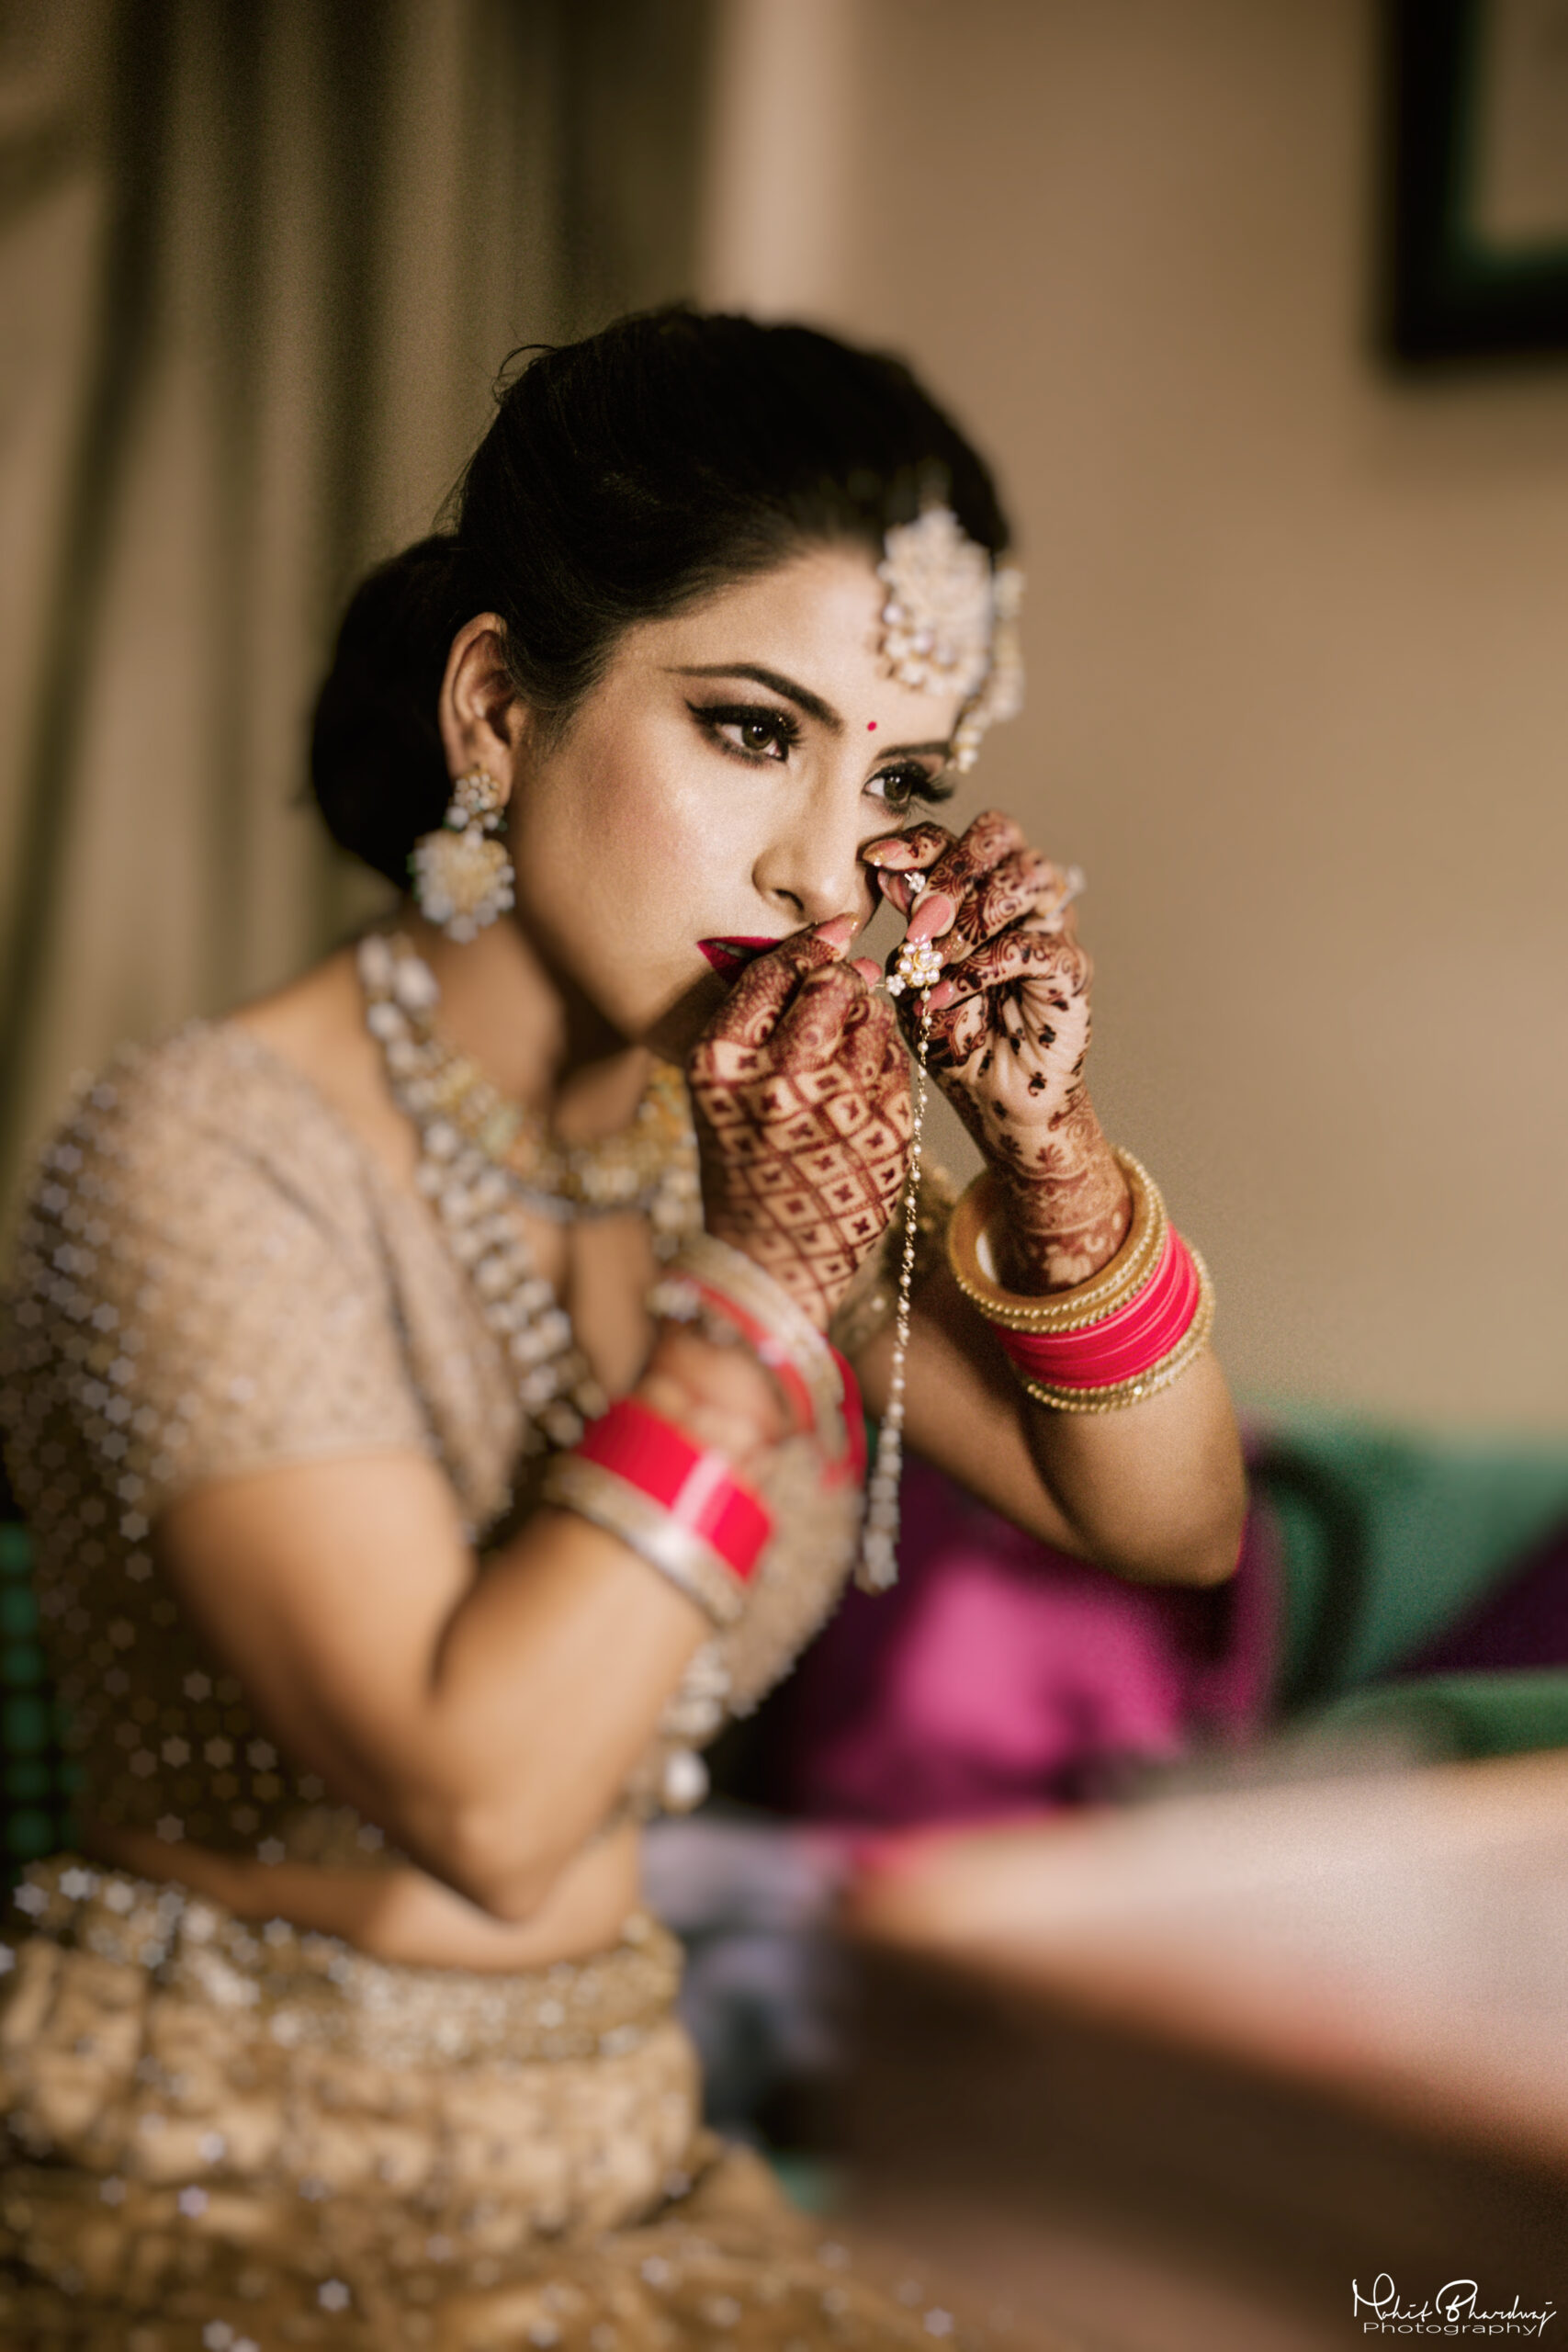 Beuatiful Bengali Bride | Indian bride photography poses, Indian wedding  photography, Indian wedding photography poses